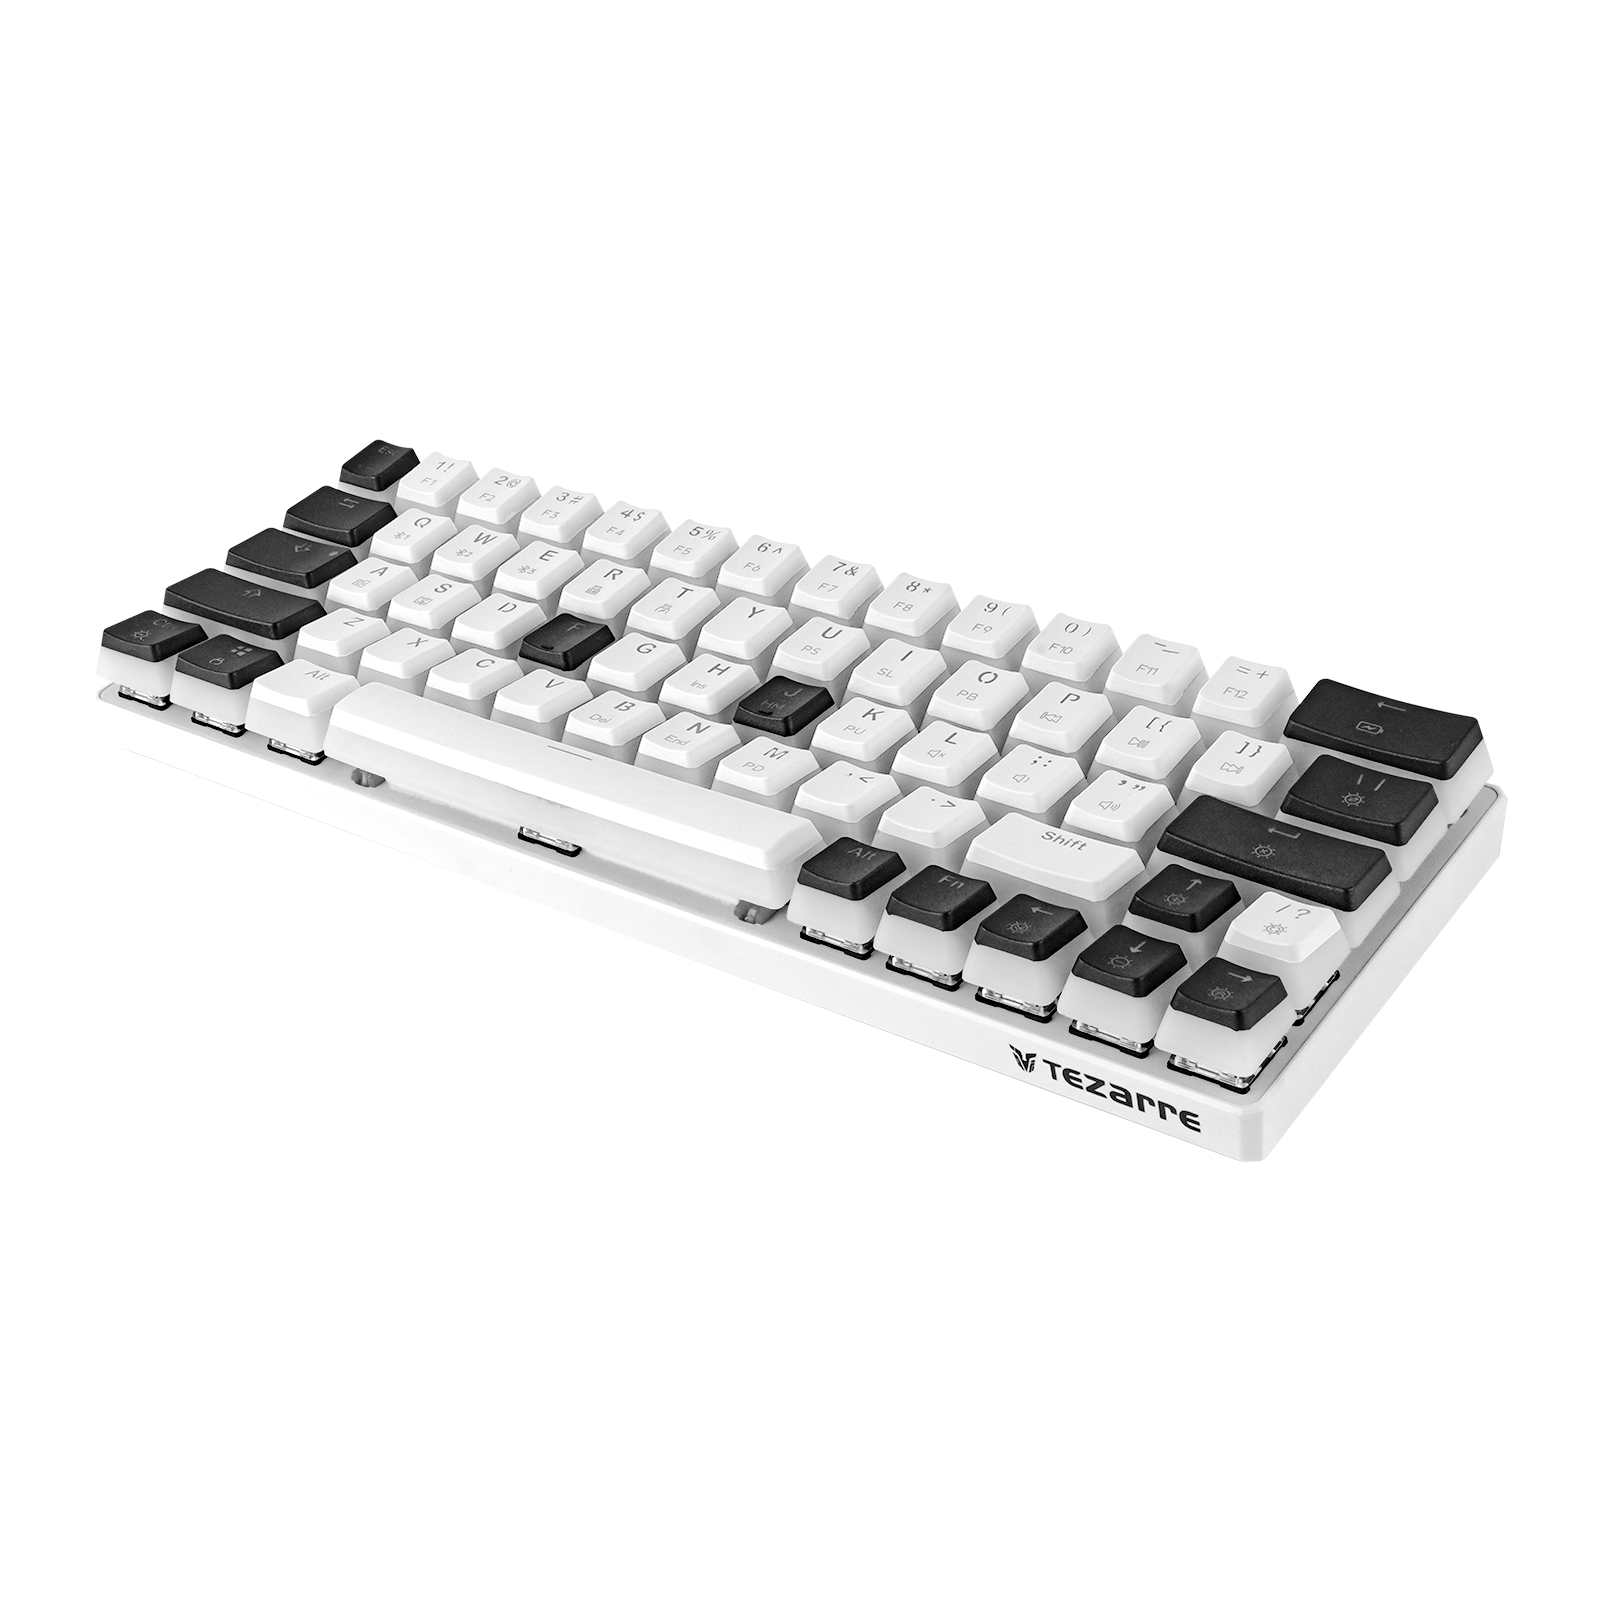 Panda TK63 - Custom 60% Keyboard